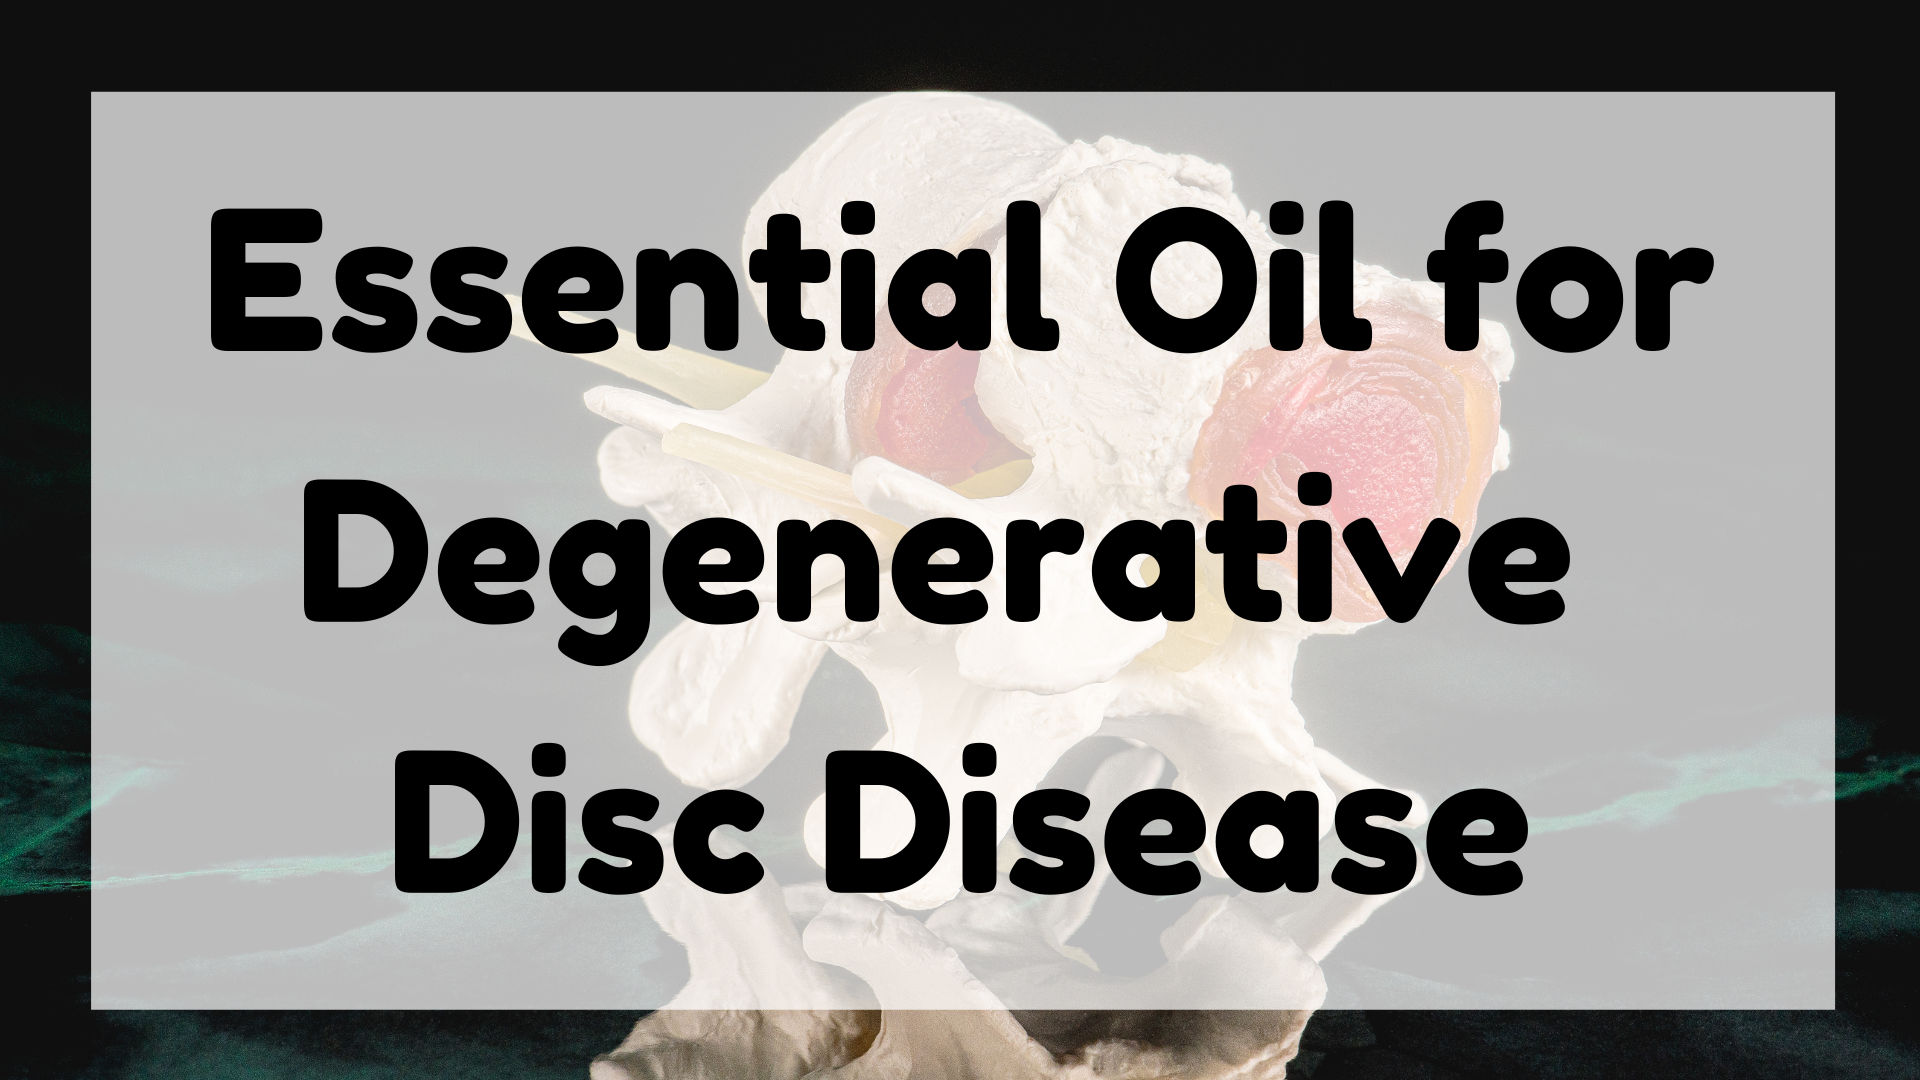 Essential Oil for Degenerative Disc Disease featured image